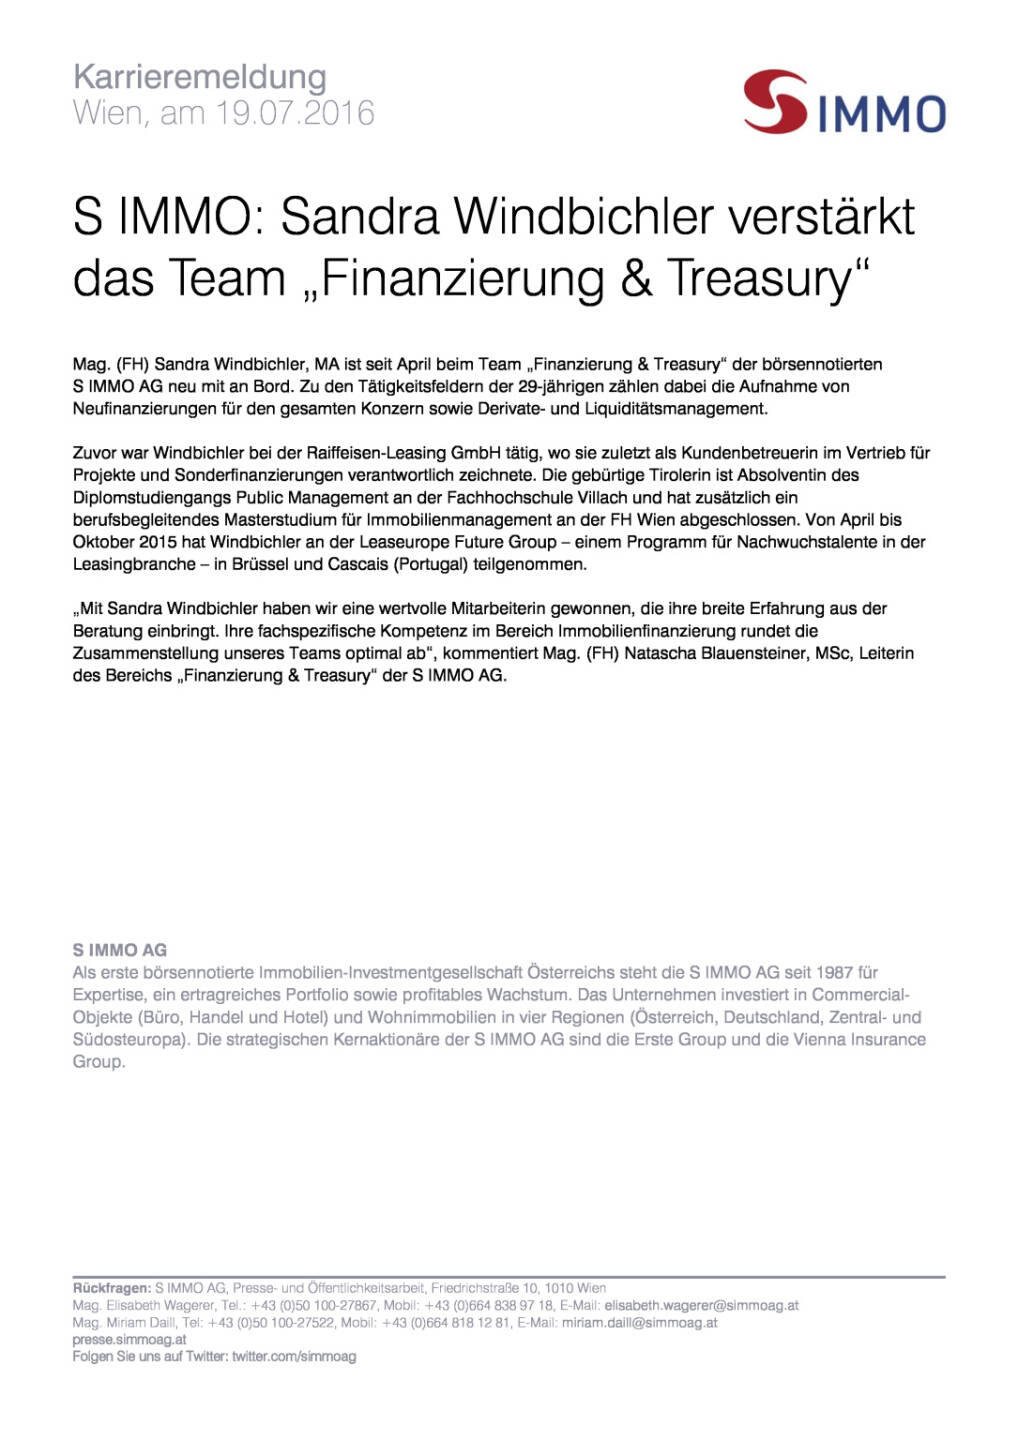 S Immo: Sandra Windbichler verstärkt das Team „Finanzierung & Treasury“, Seite 1/1, komplettes Dokument unter http://boerse-social.com/static/uploads/file_1444_s_immo_sandra_windbichler_verstarkt_das_team_finanzierung_treasury.pdf